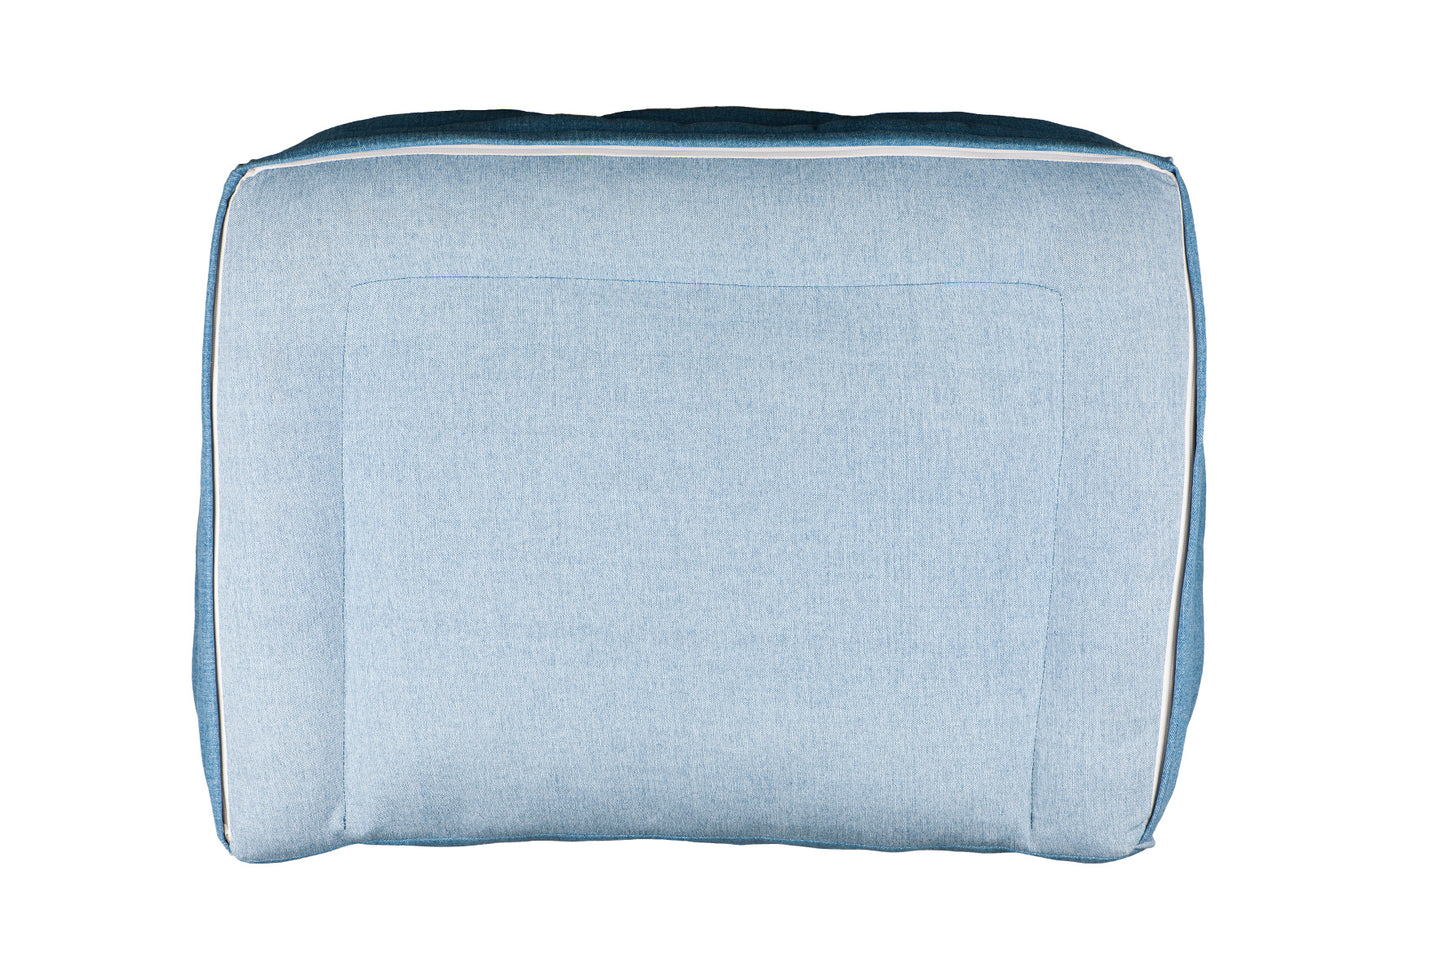 Blue Jean Sofa Bed